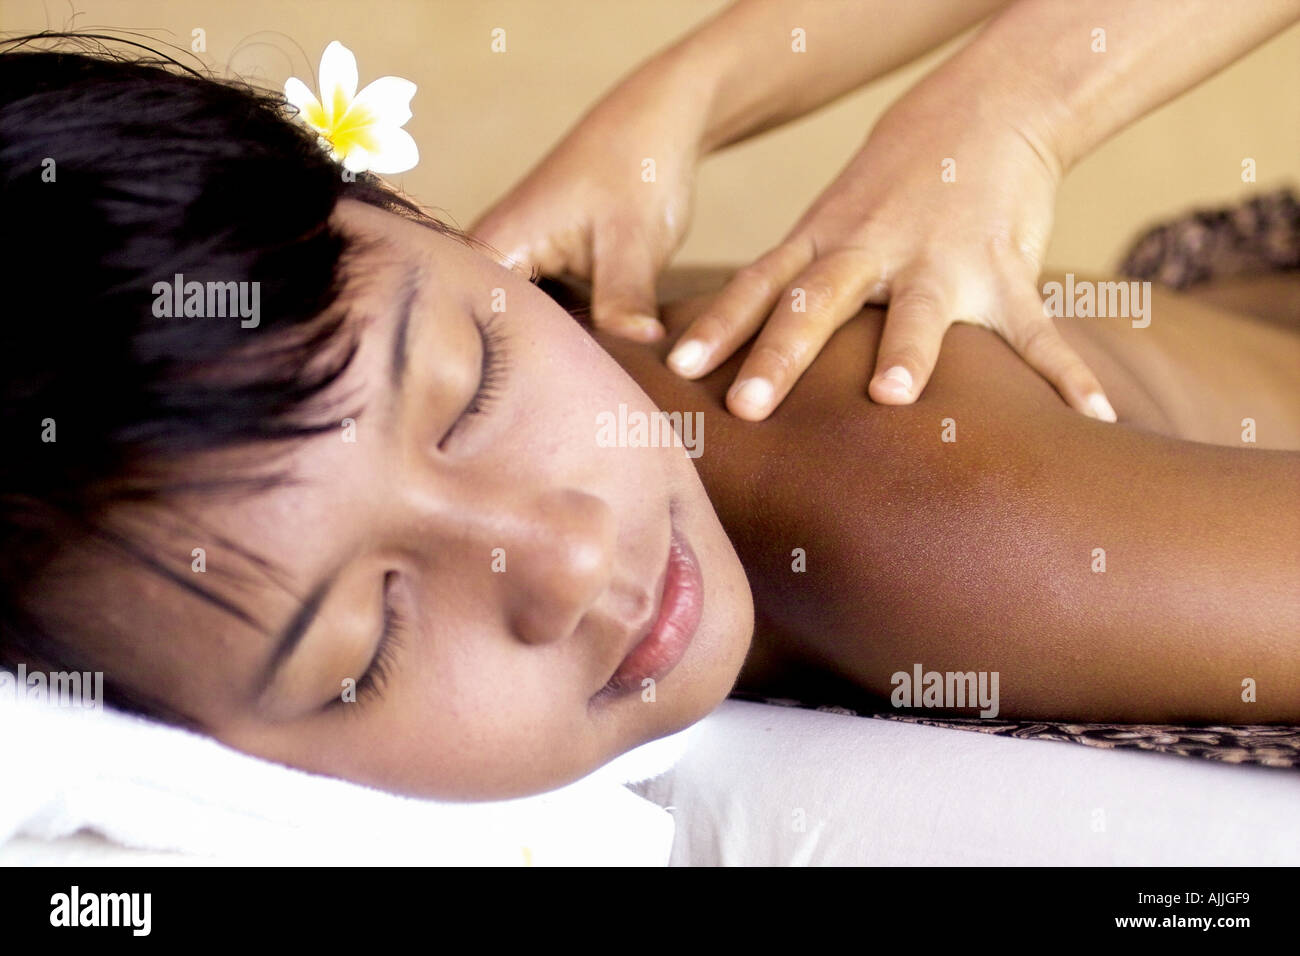 Indonesia massage. Массаж на Бали. Сертификат: Балийский массаж.